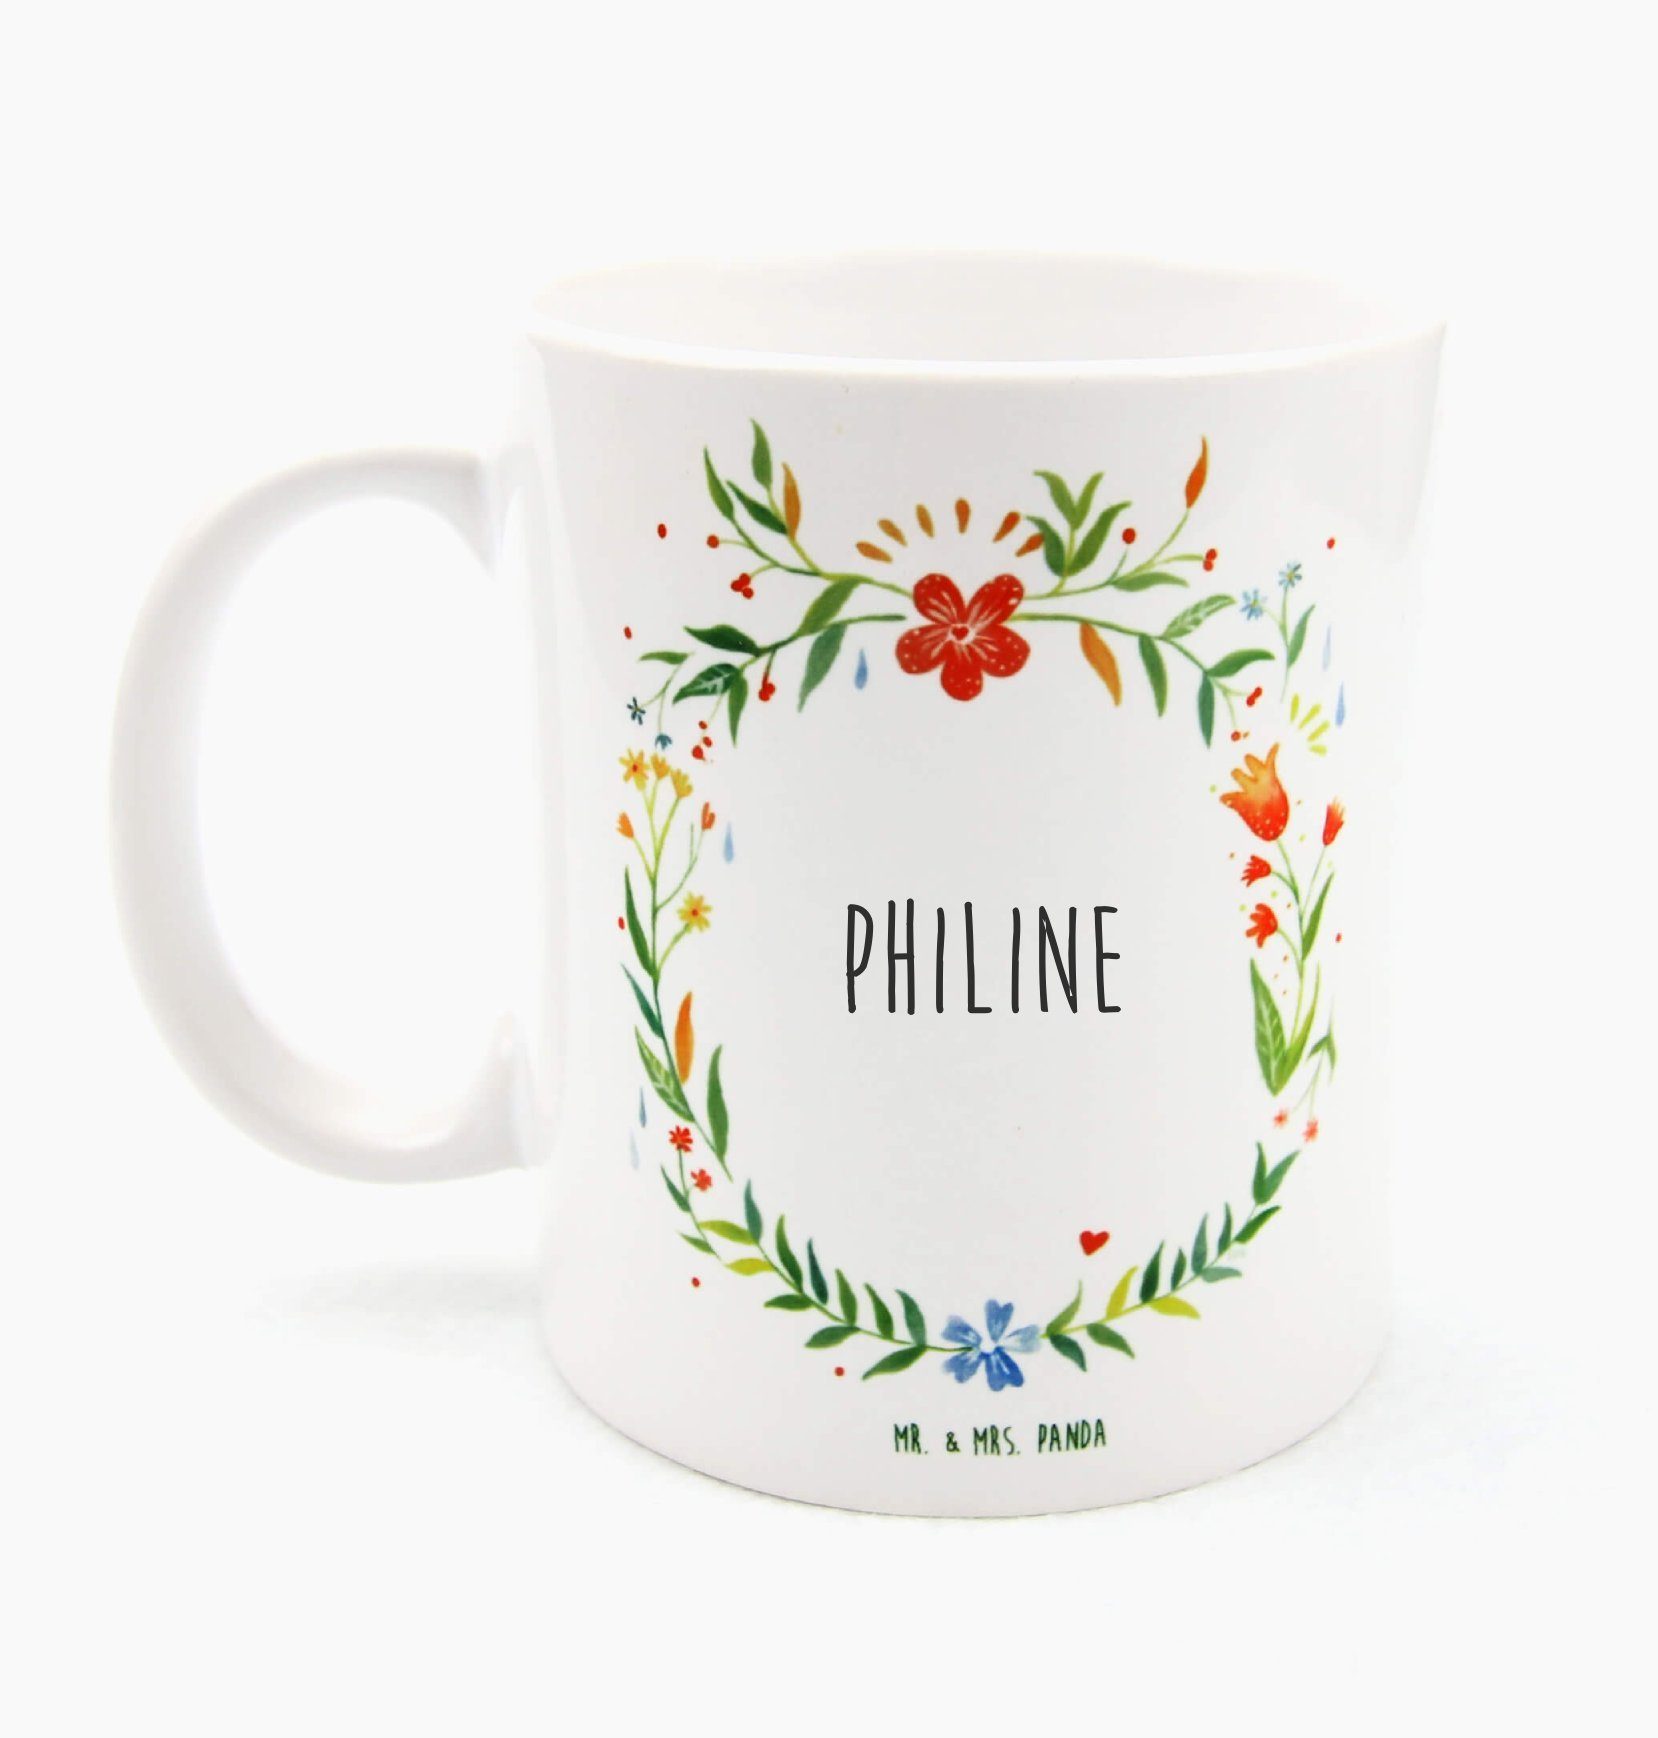 Mr. & Mrs. Panda Tasse Philine - Geschenk, Geschenk Tasse, Porzellantasse, Kaffeetasse, Teet, Keramik